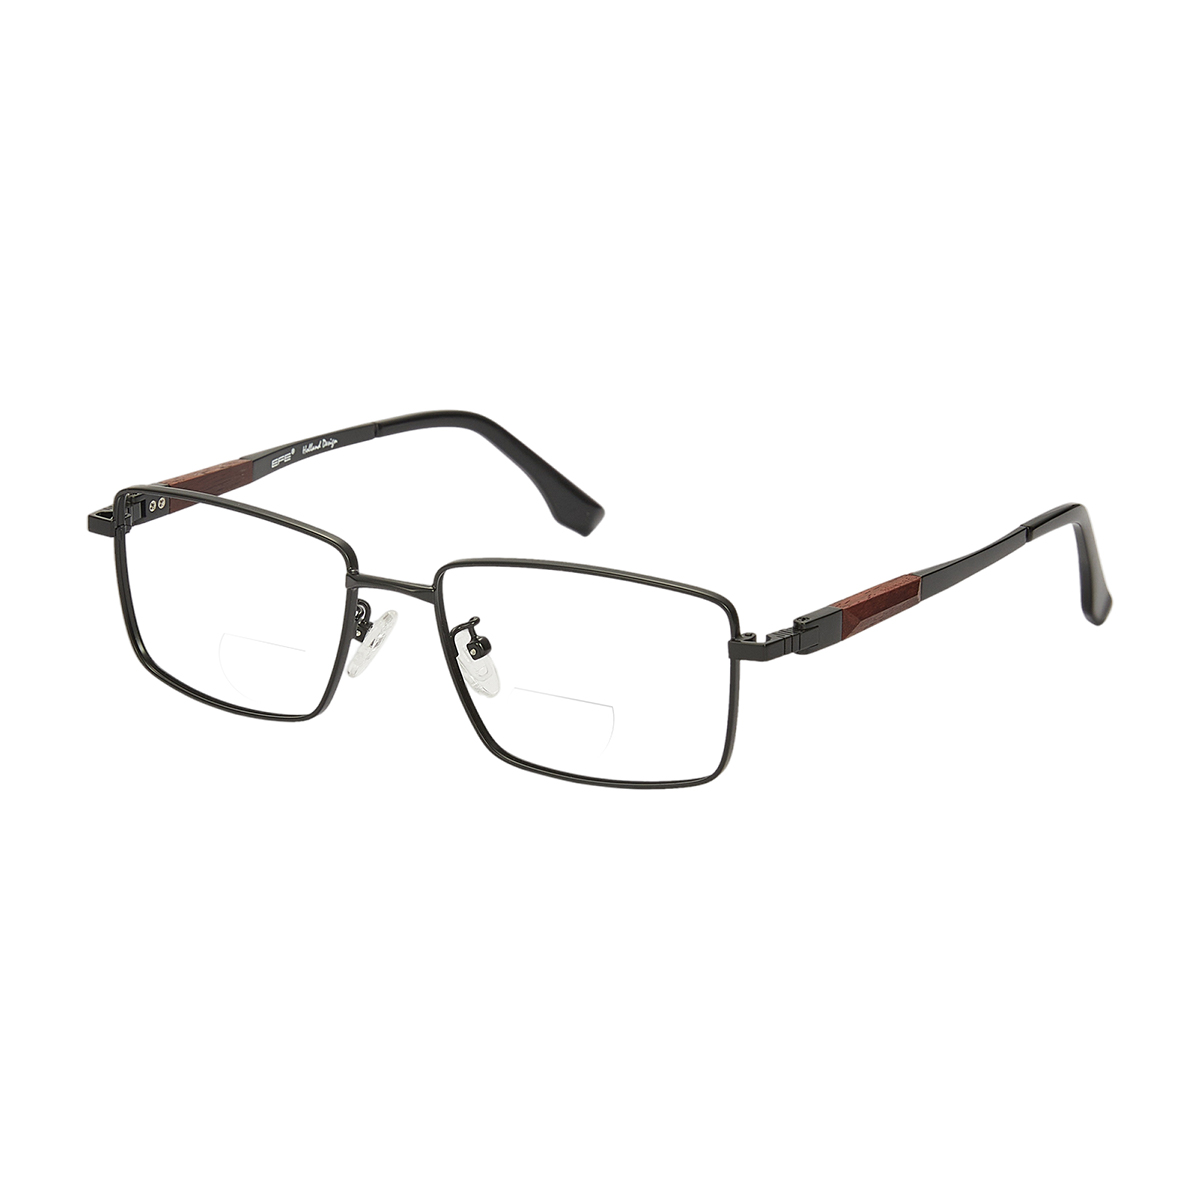 Amphion - Rectangle Black Reading Glasses for Men